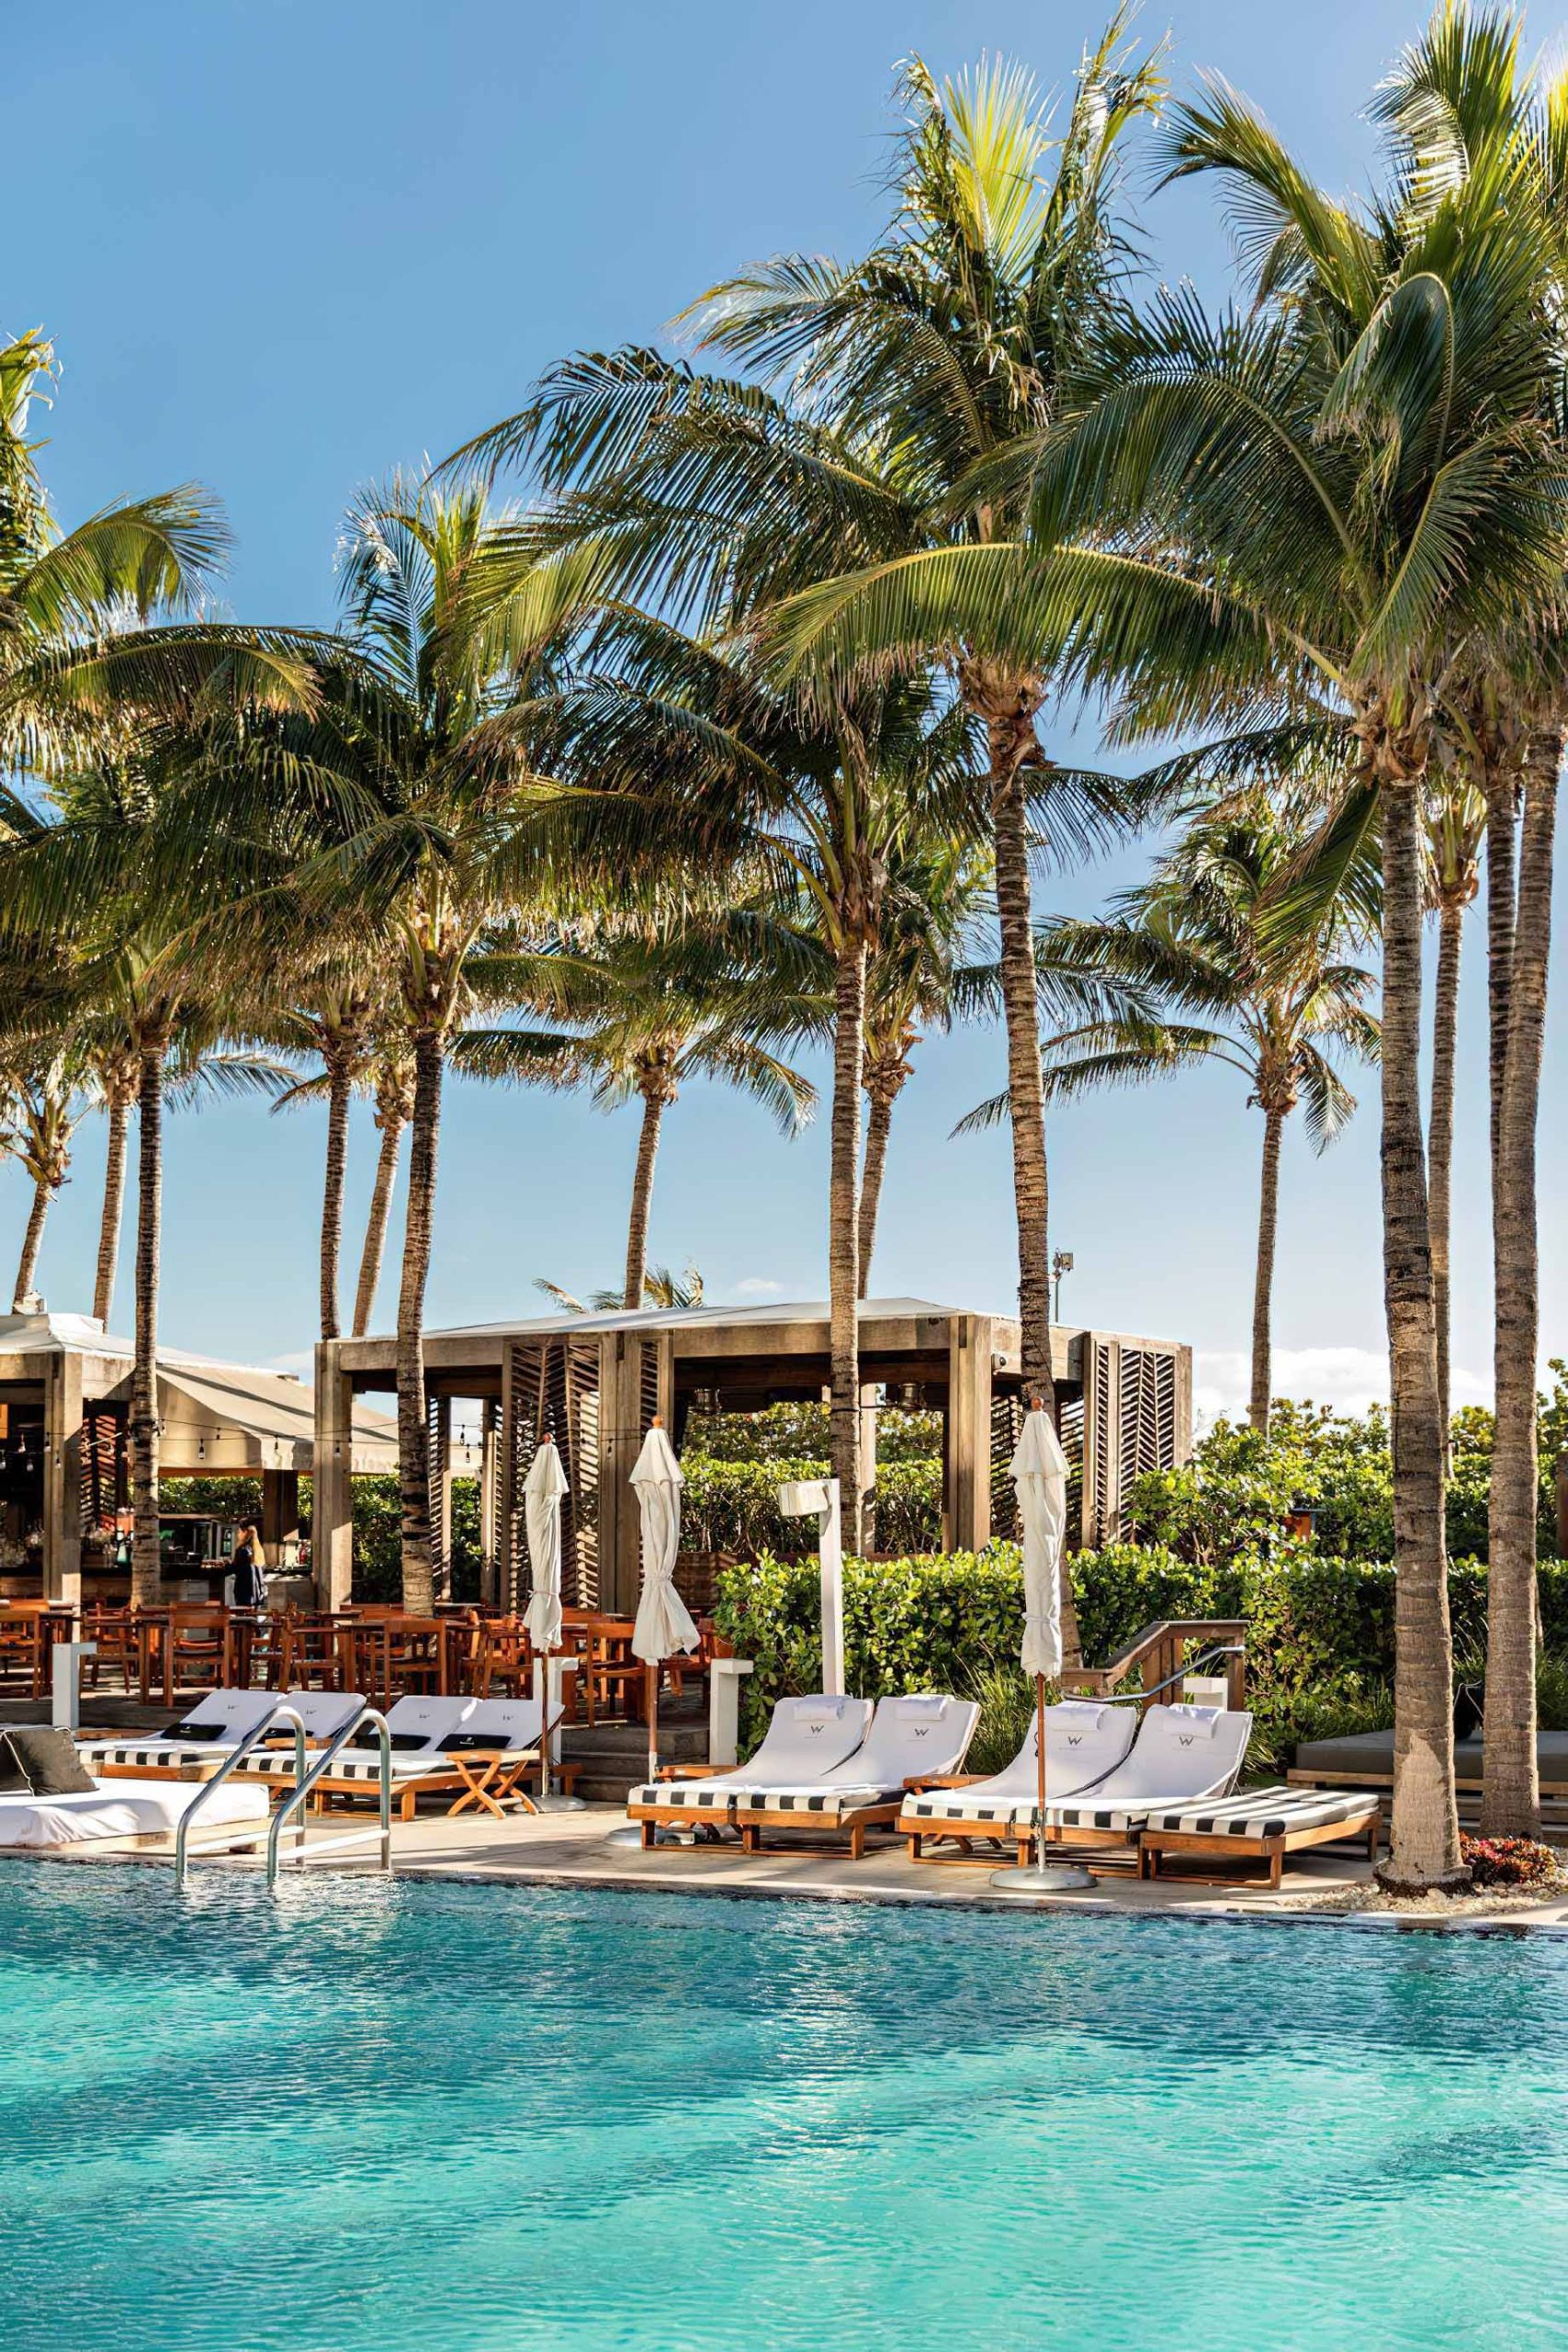 W South Beach Hotel - Miami Beach, FL, USA - Poolside